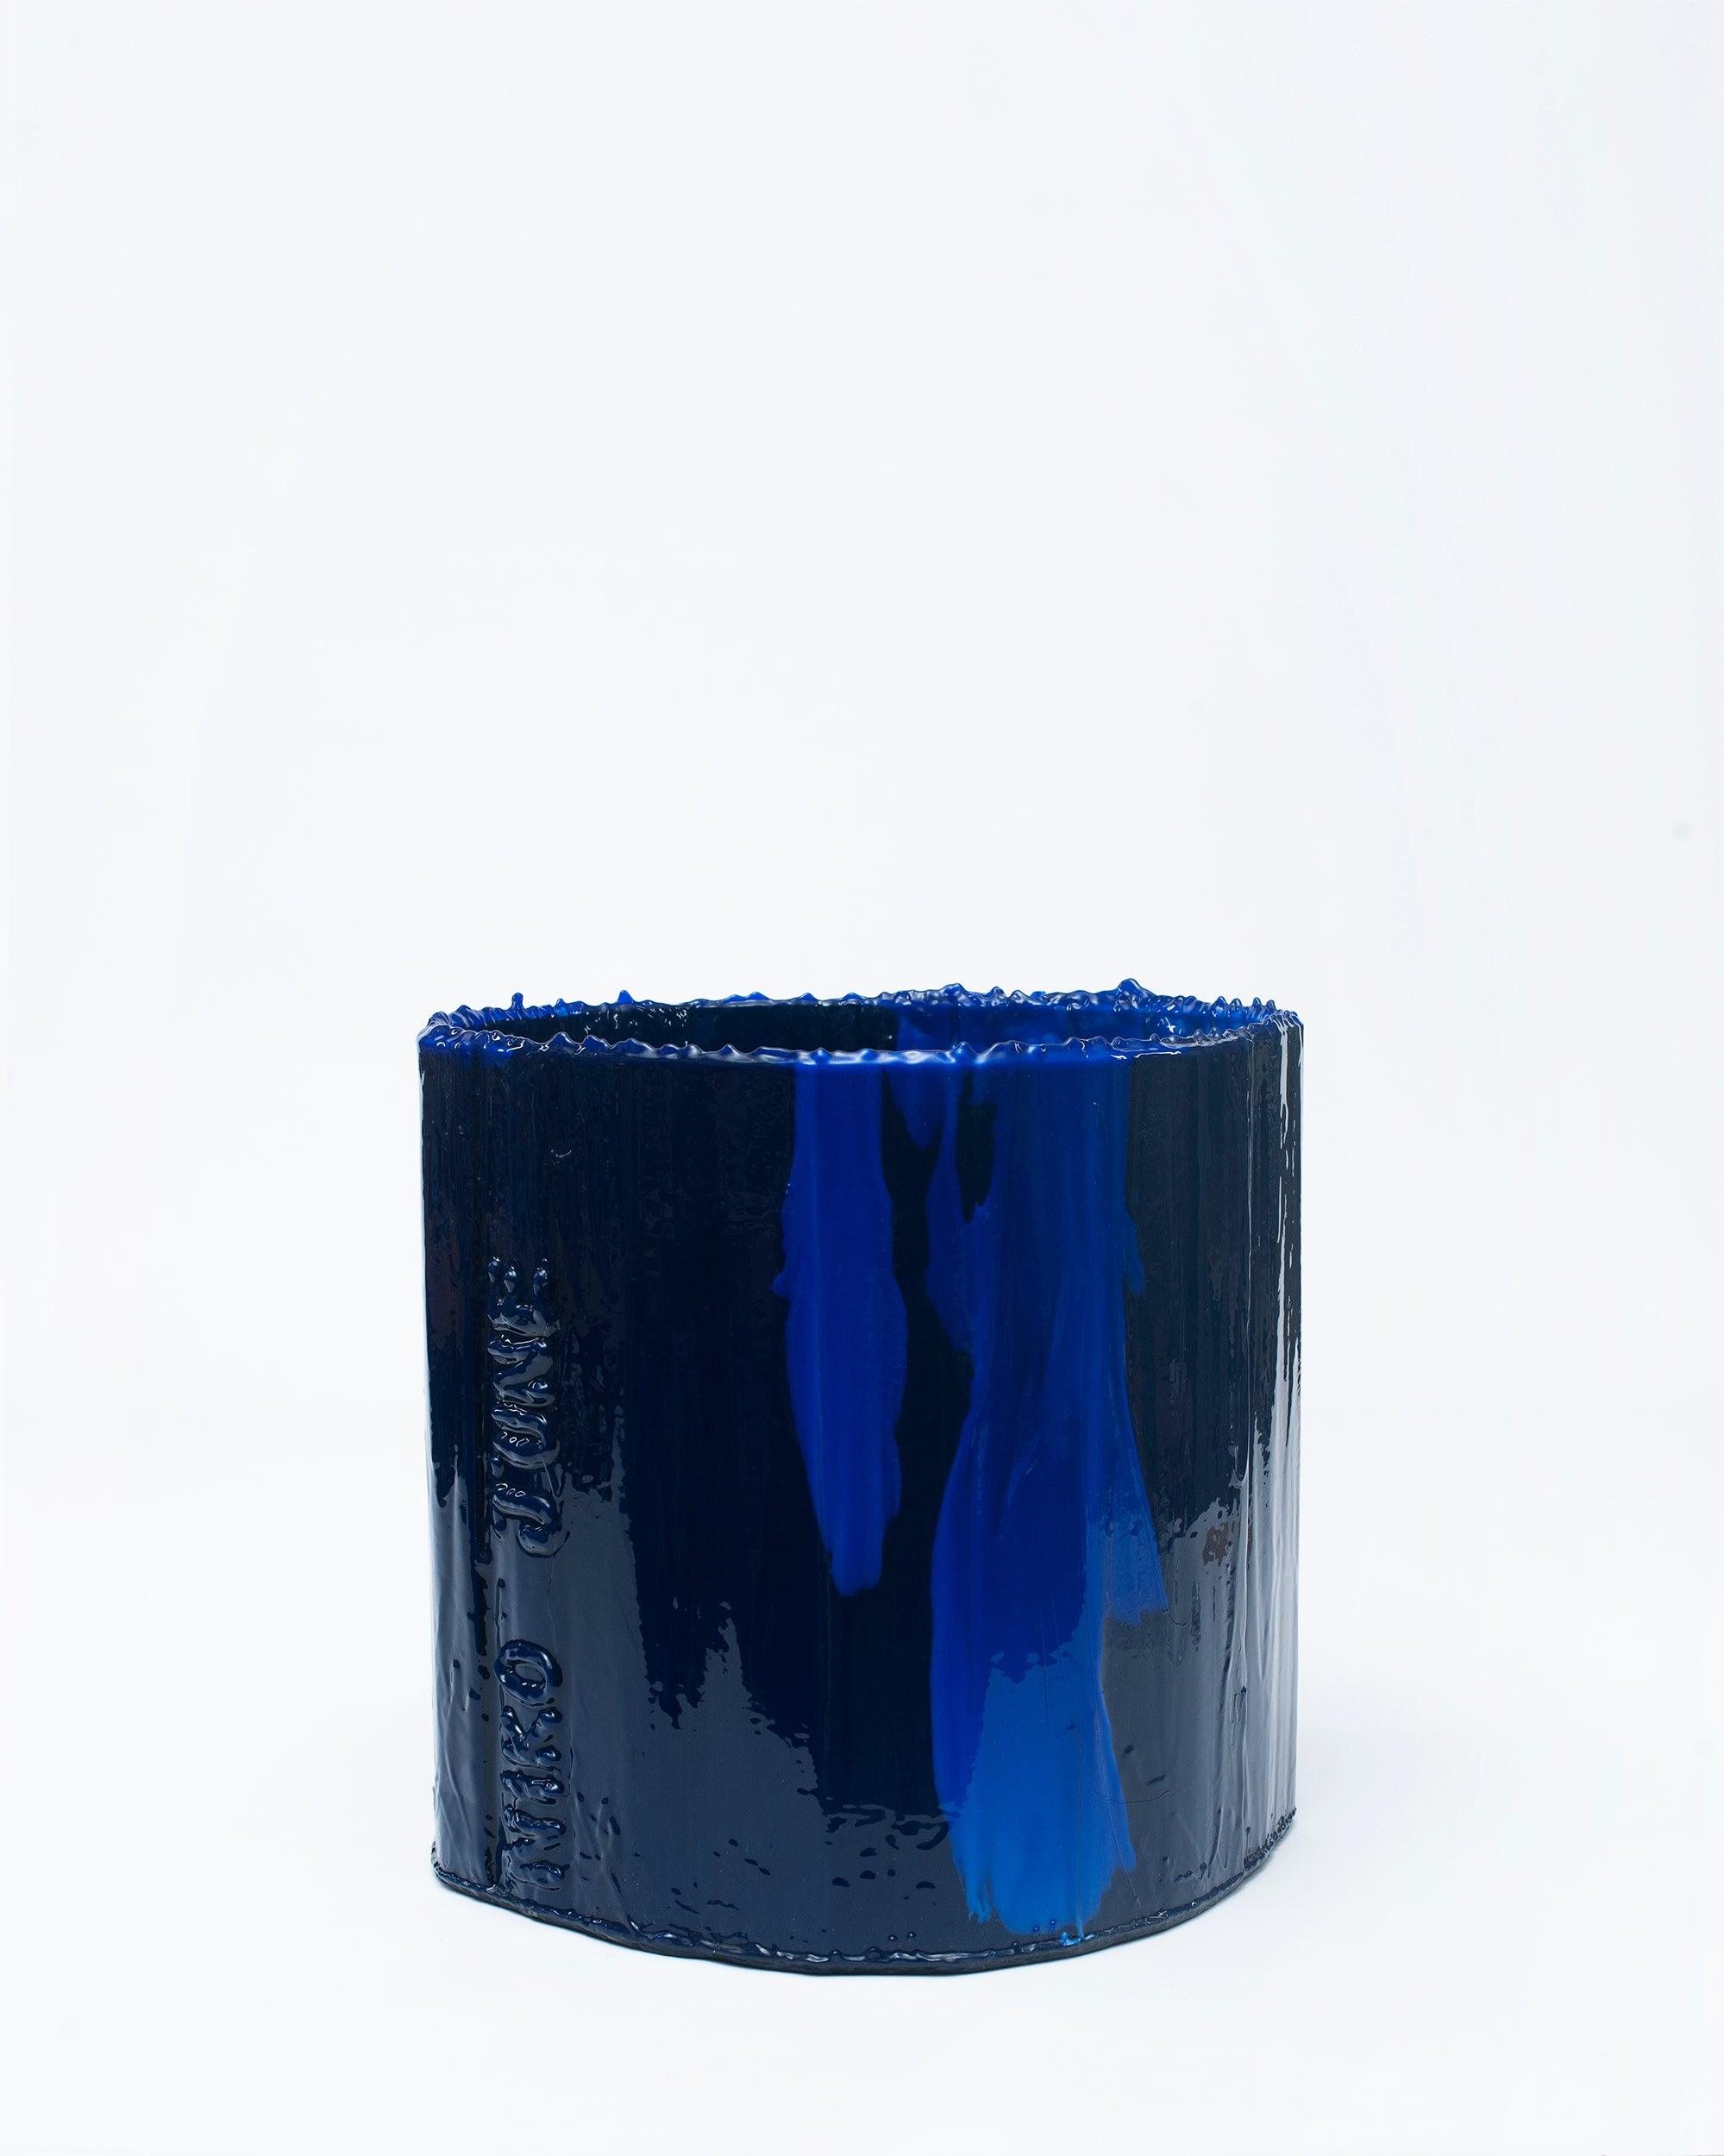 White background, NIKO JUNE logo on the left side in handmade organizer object Deep Flex blue